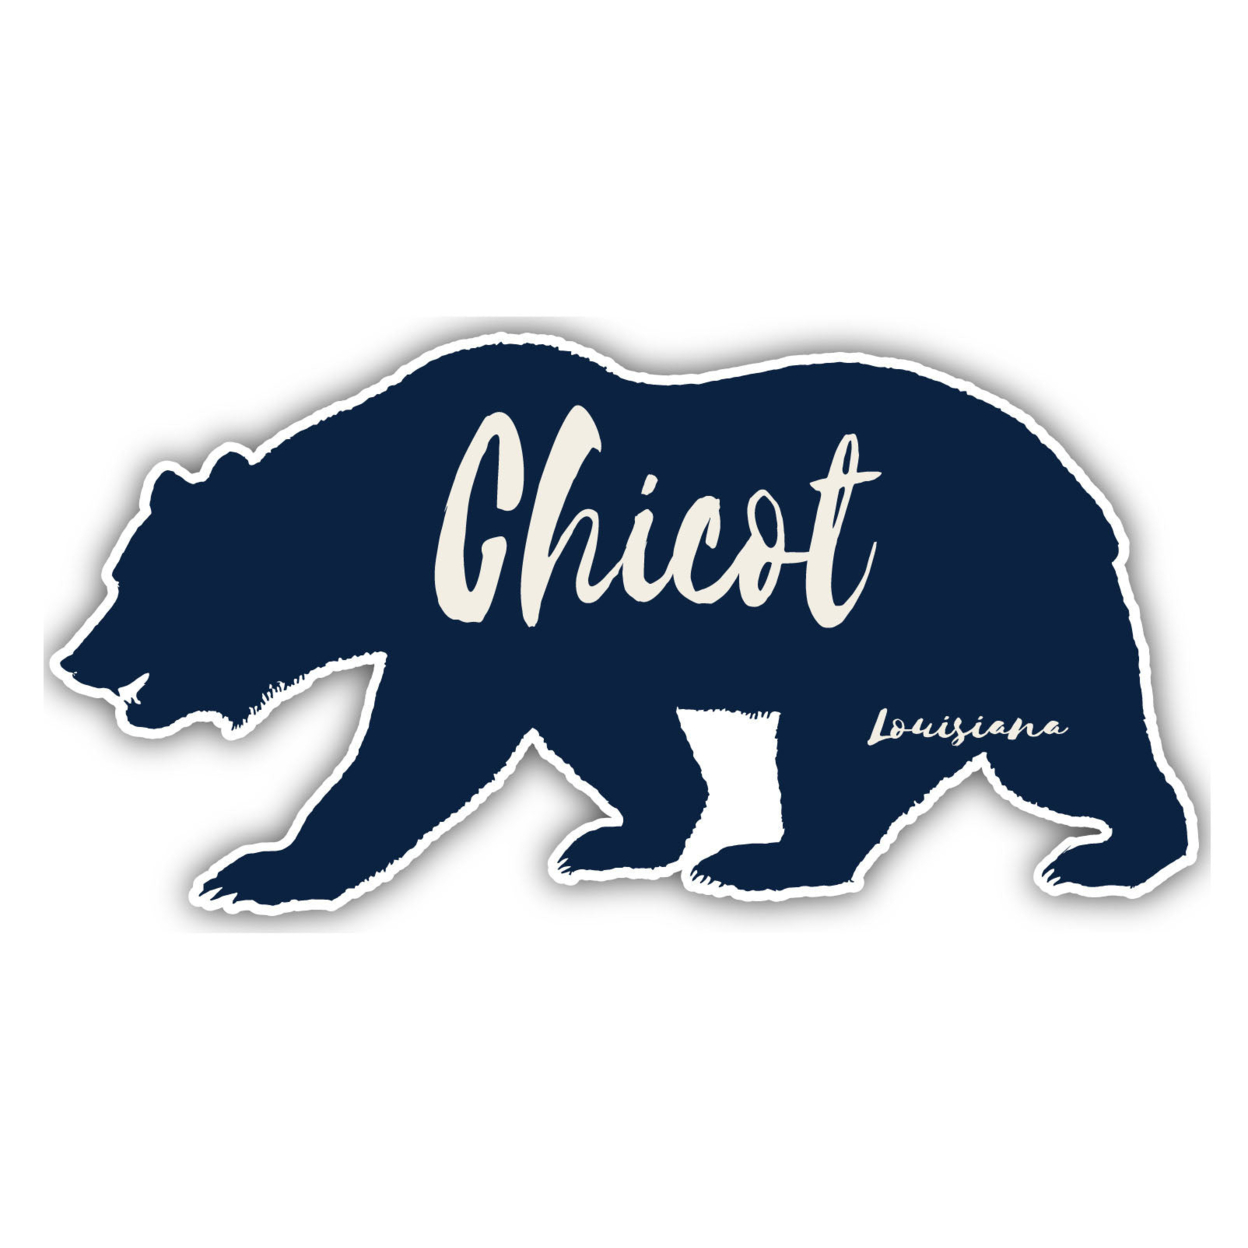 Chicot Louisiana Souvenir Decorative Stickers (Choose Theme And Size) - Single Unit, 10-Inch, Bear